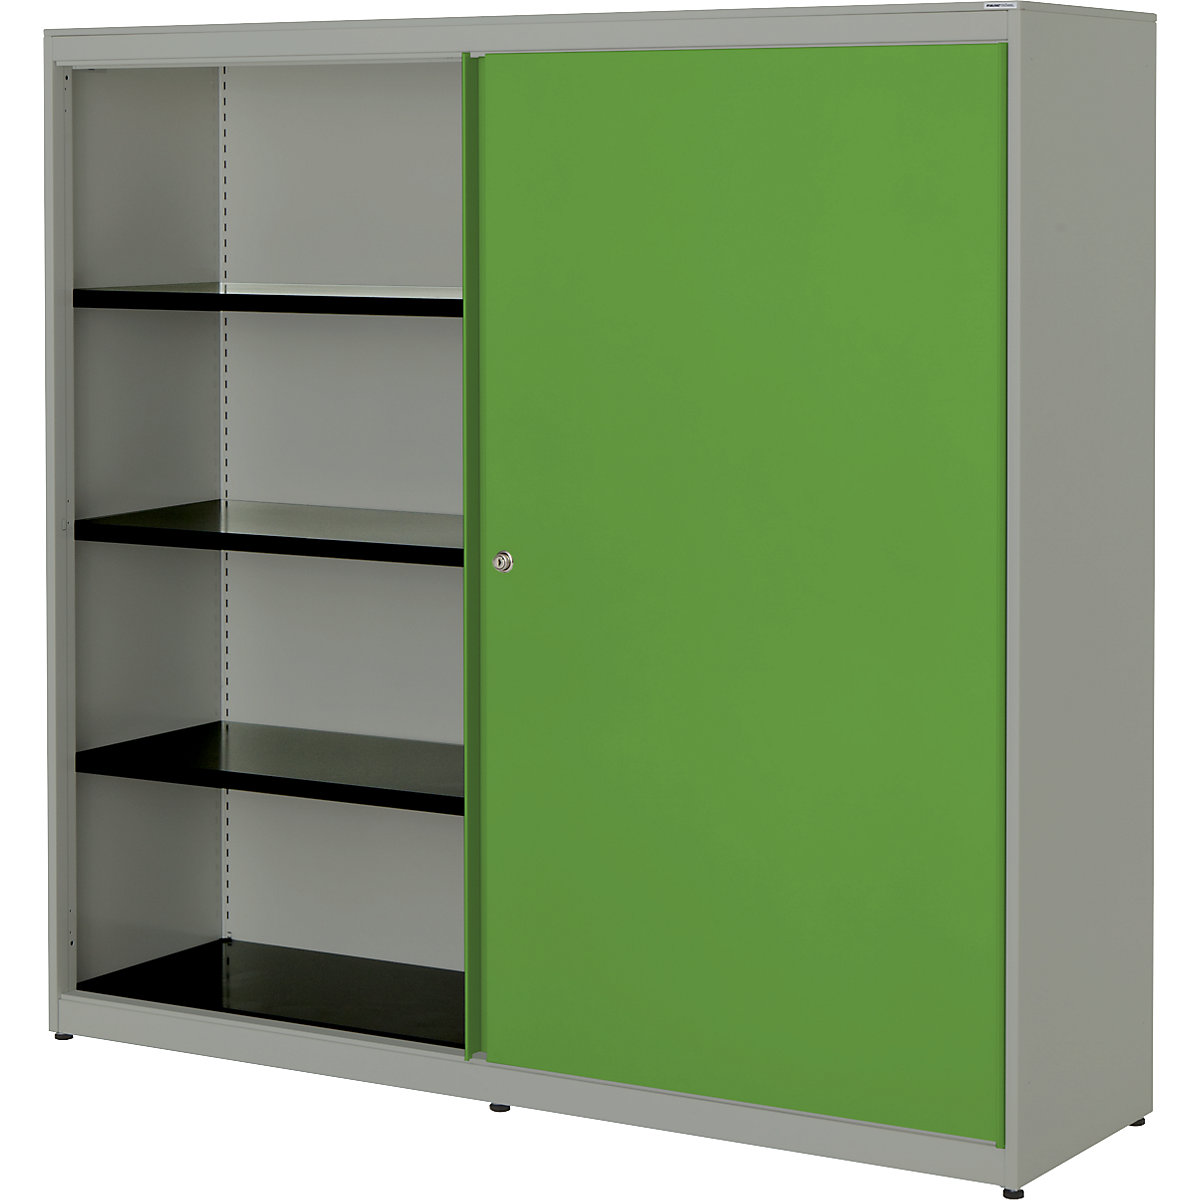 mauser – Dulap cu uși glisante, î. x lăț. x ad. 1516 x 1600 x 432 mm, blat din oțel, 3 x 2 polițe, alb aluminiu / verde gălbui / alb aluminiu